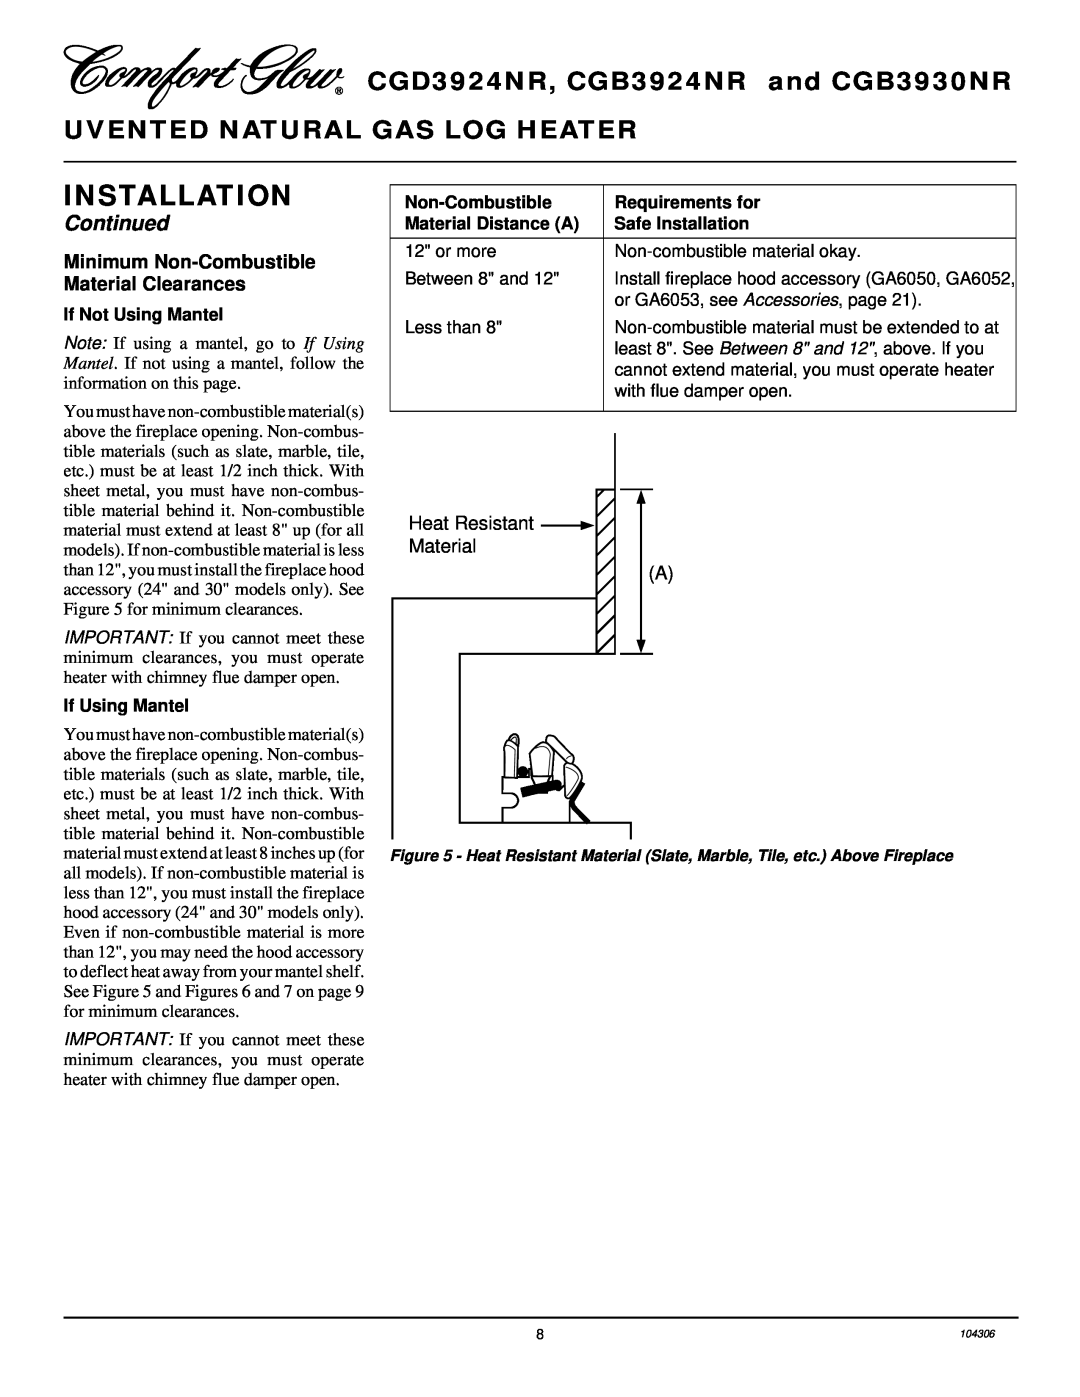 Desa installation manual Installation, CGD3924NR, CGB3924NR and CGB3930NR, Uvented Natural Gas Log Heater, Continued 